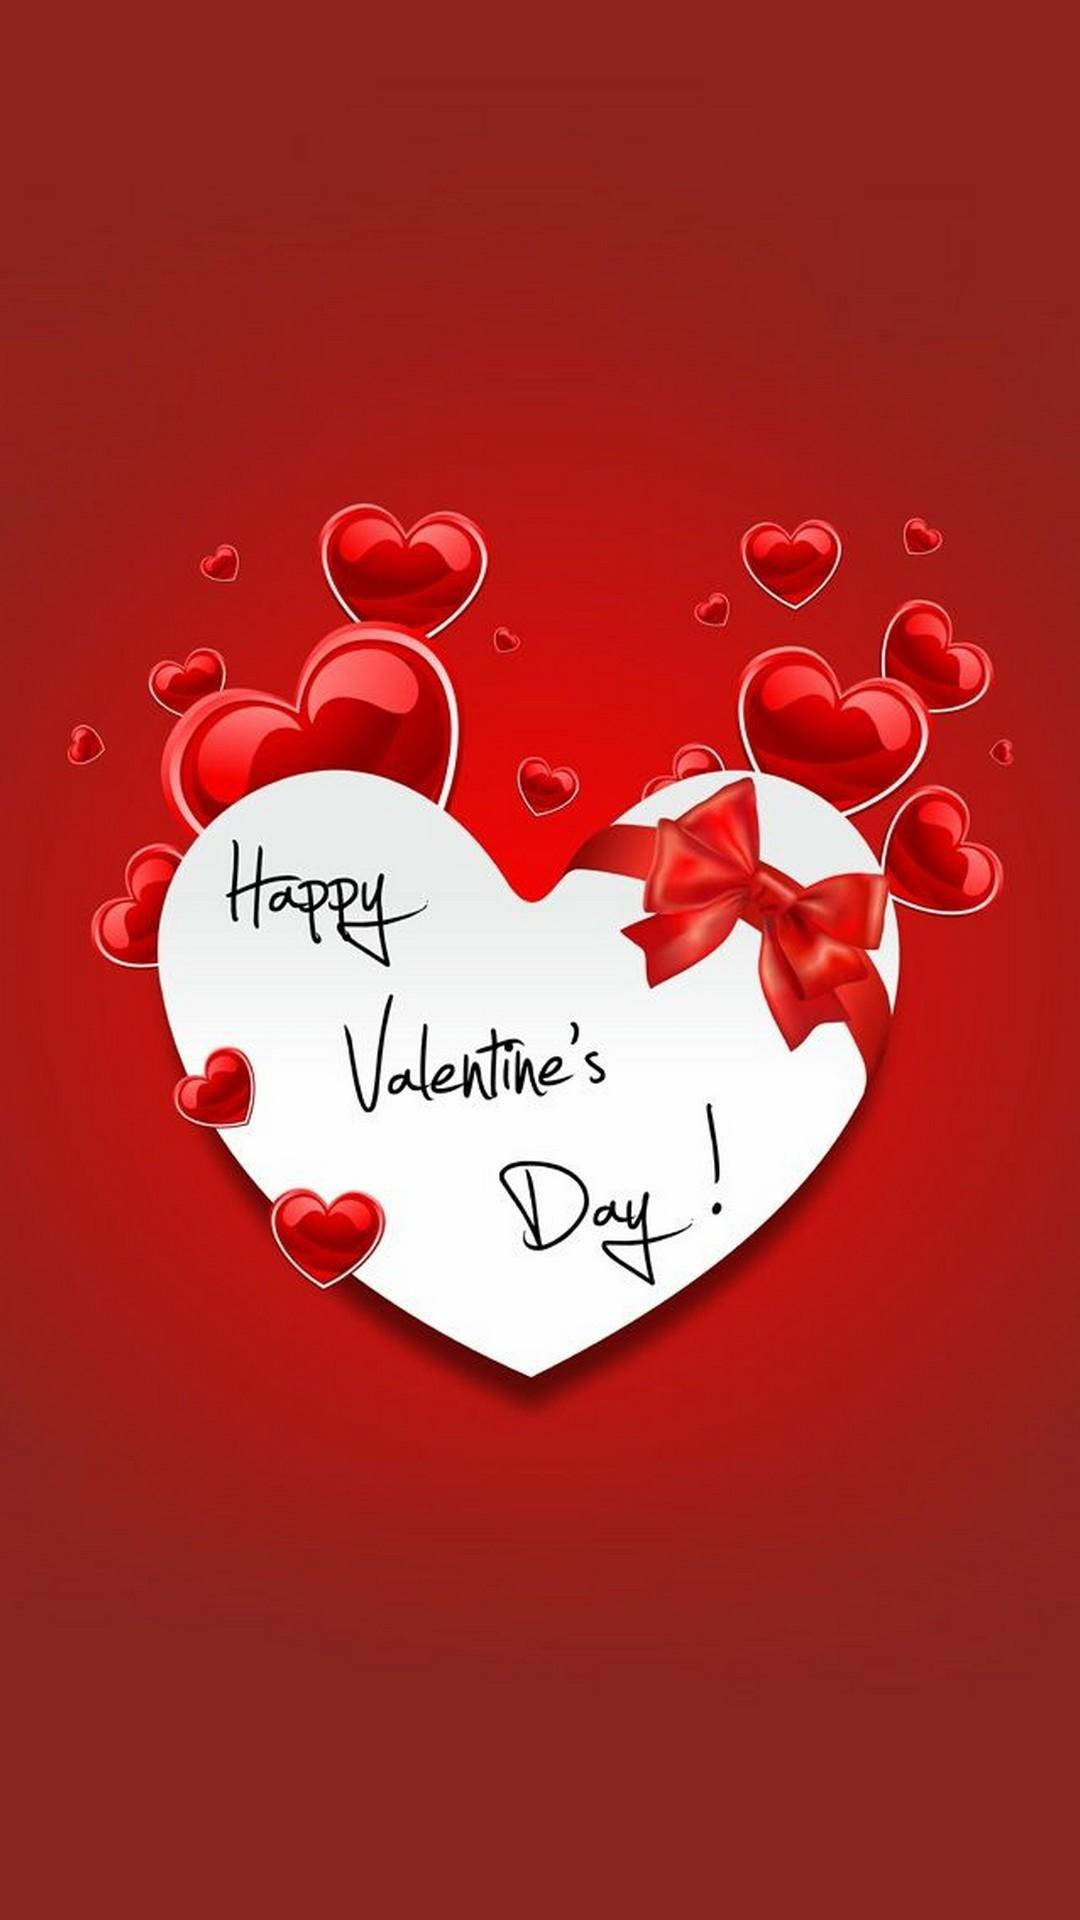 Happy Valentine’s Day Ribbon Heart Background